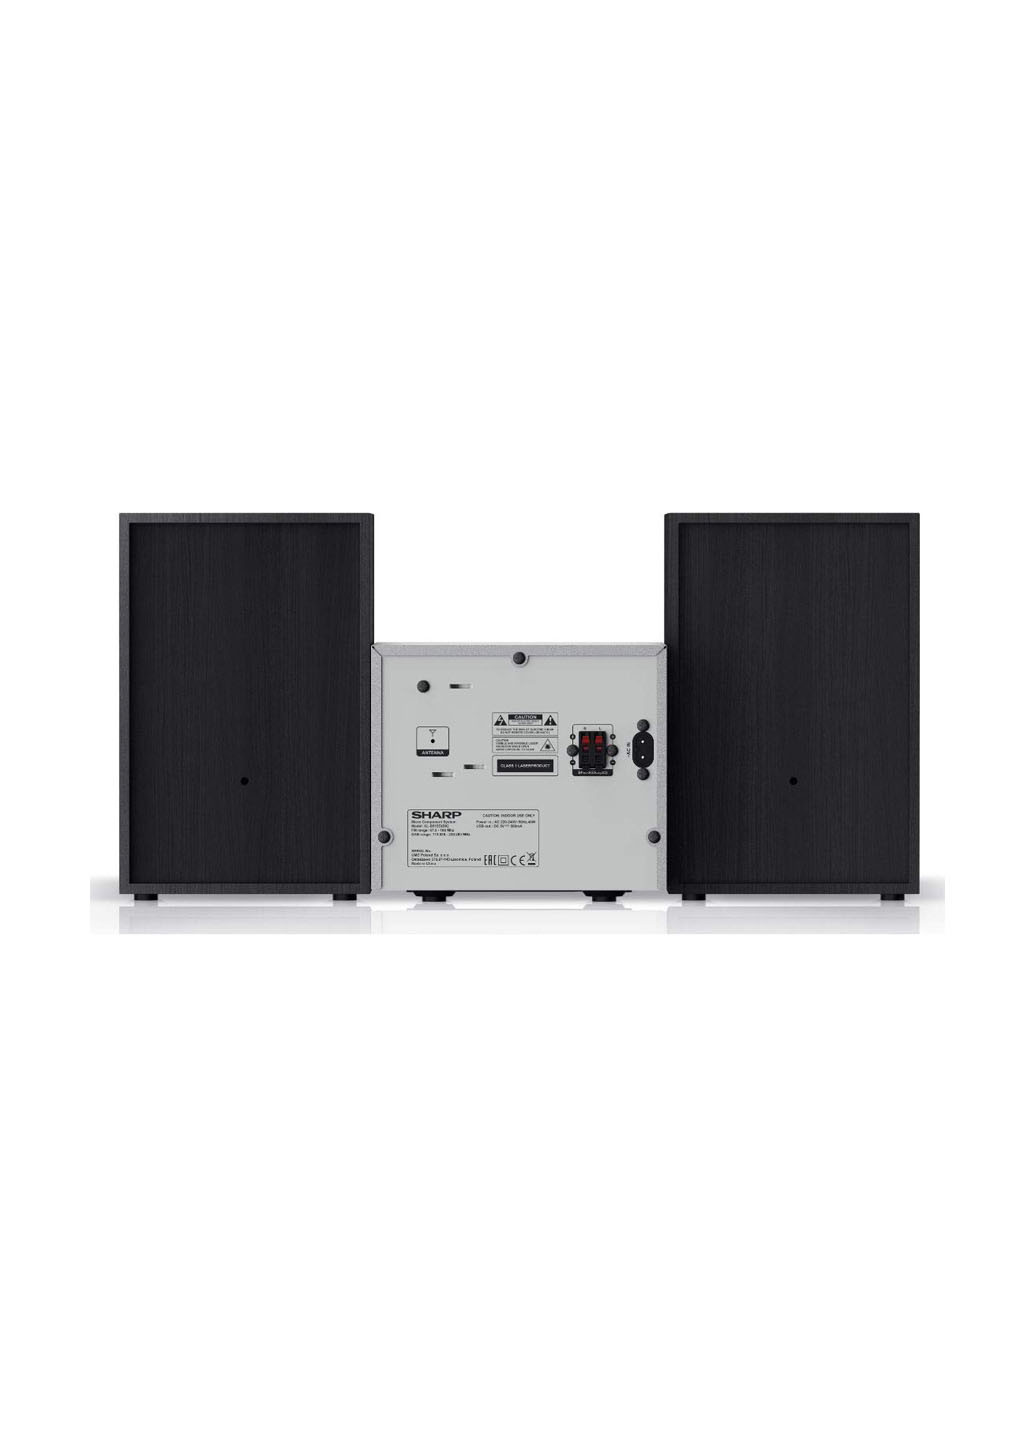 Музичний центр Micro Sound System (XL-B515D (BK)) Sharp micro sound system (xl-b515d(bk)) (143197280)